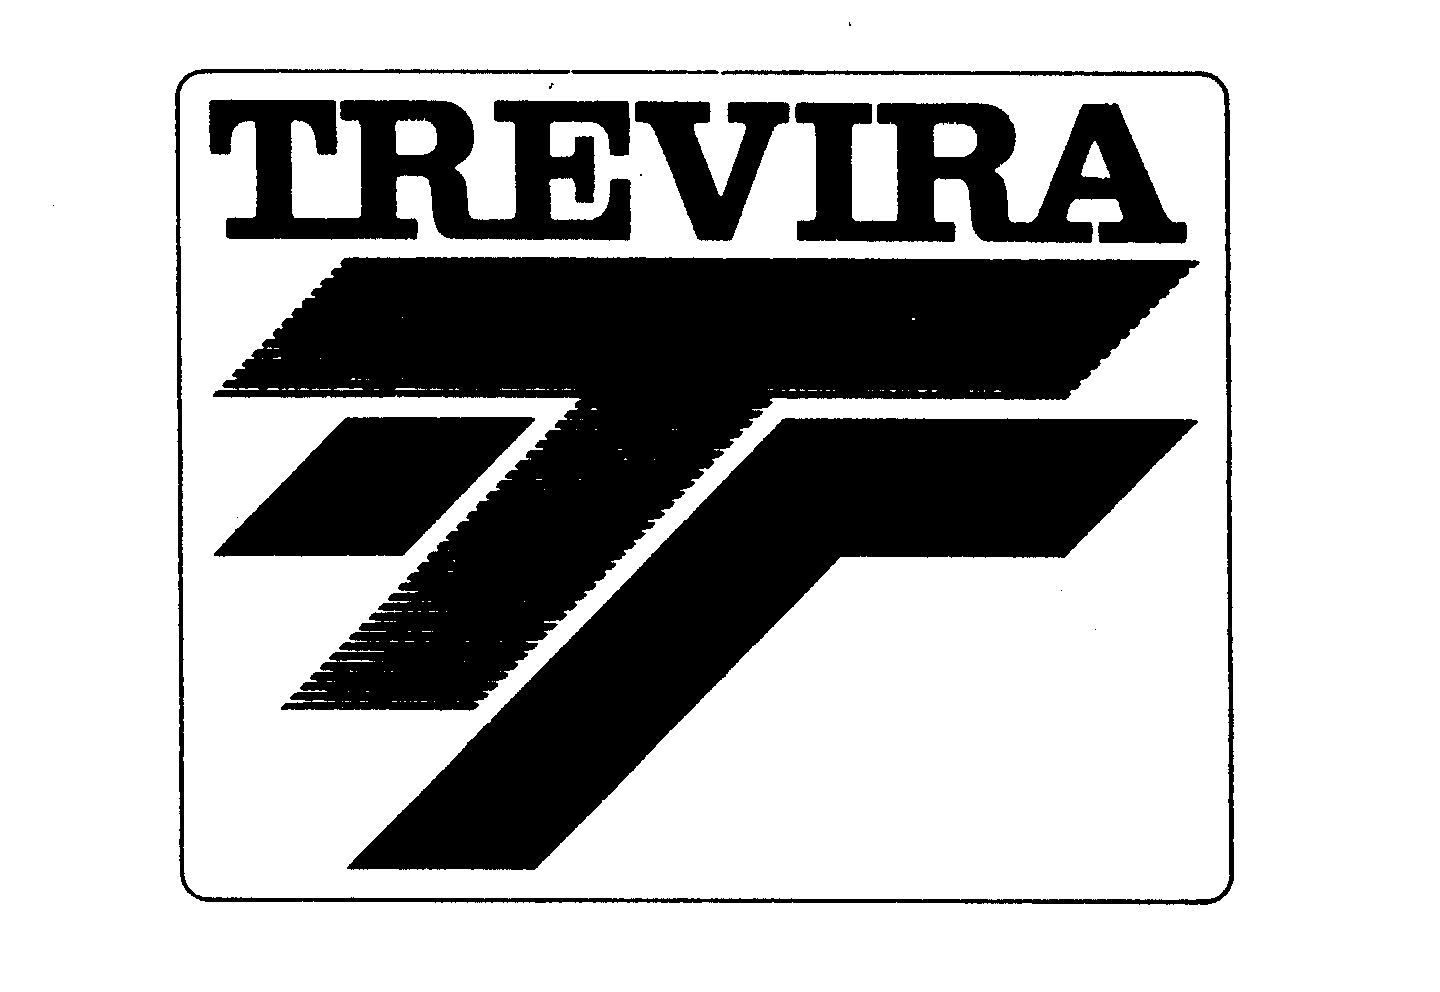  TREVIRA